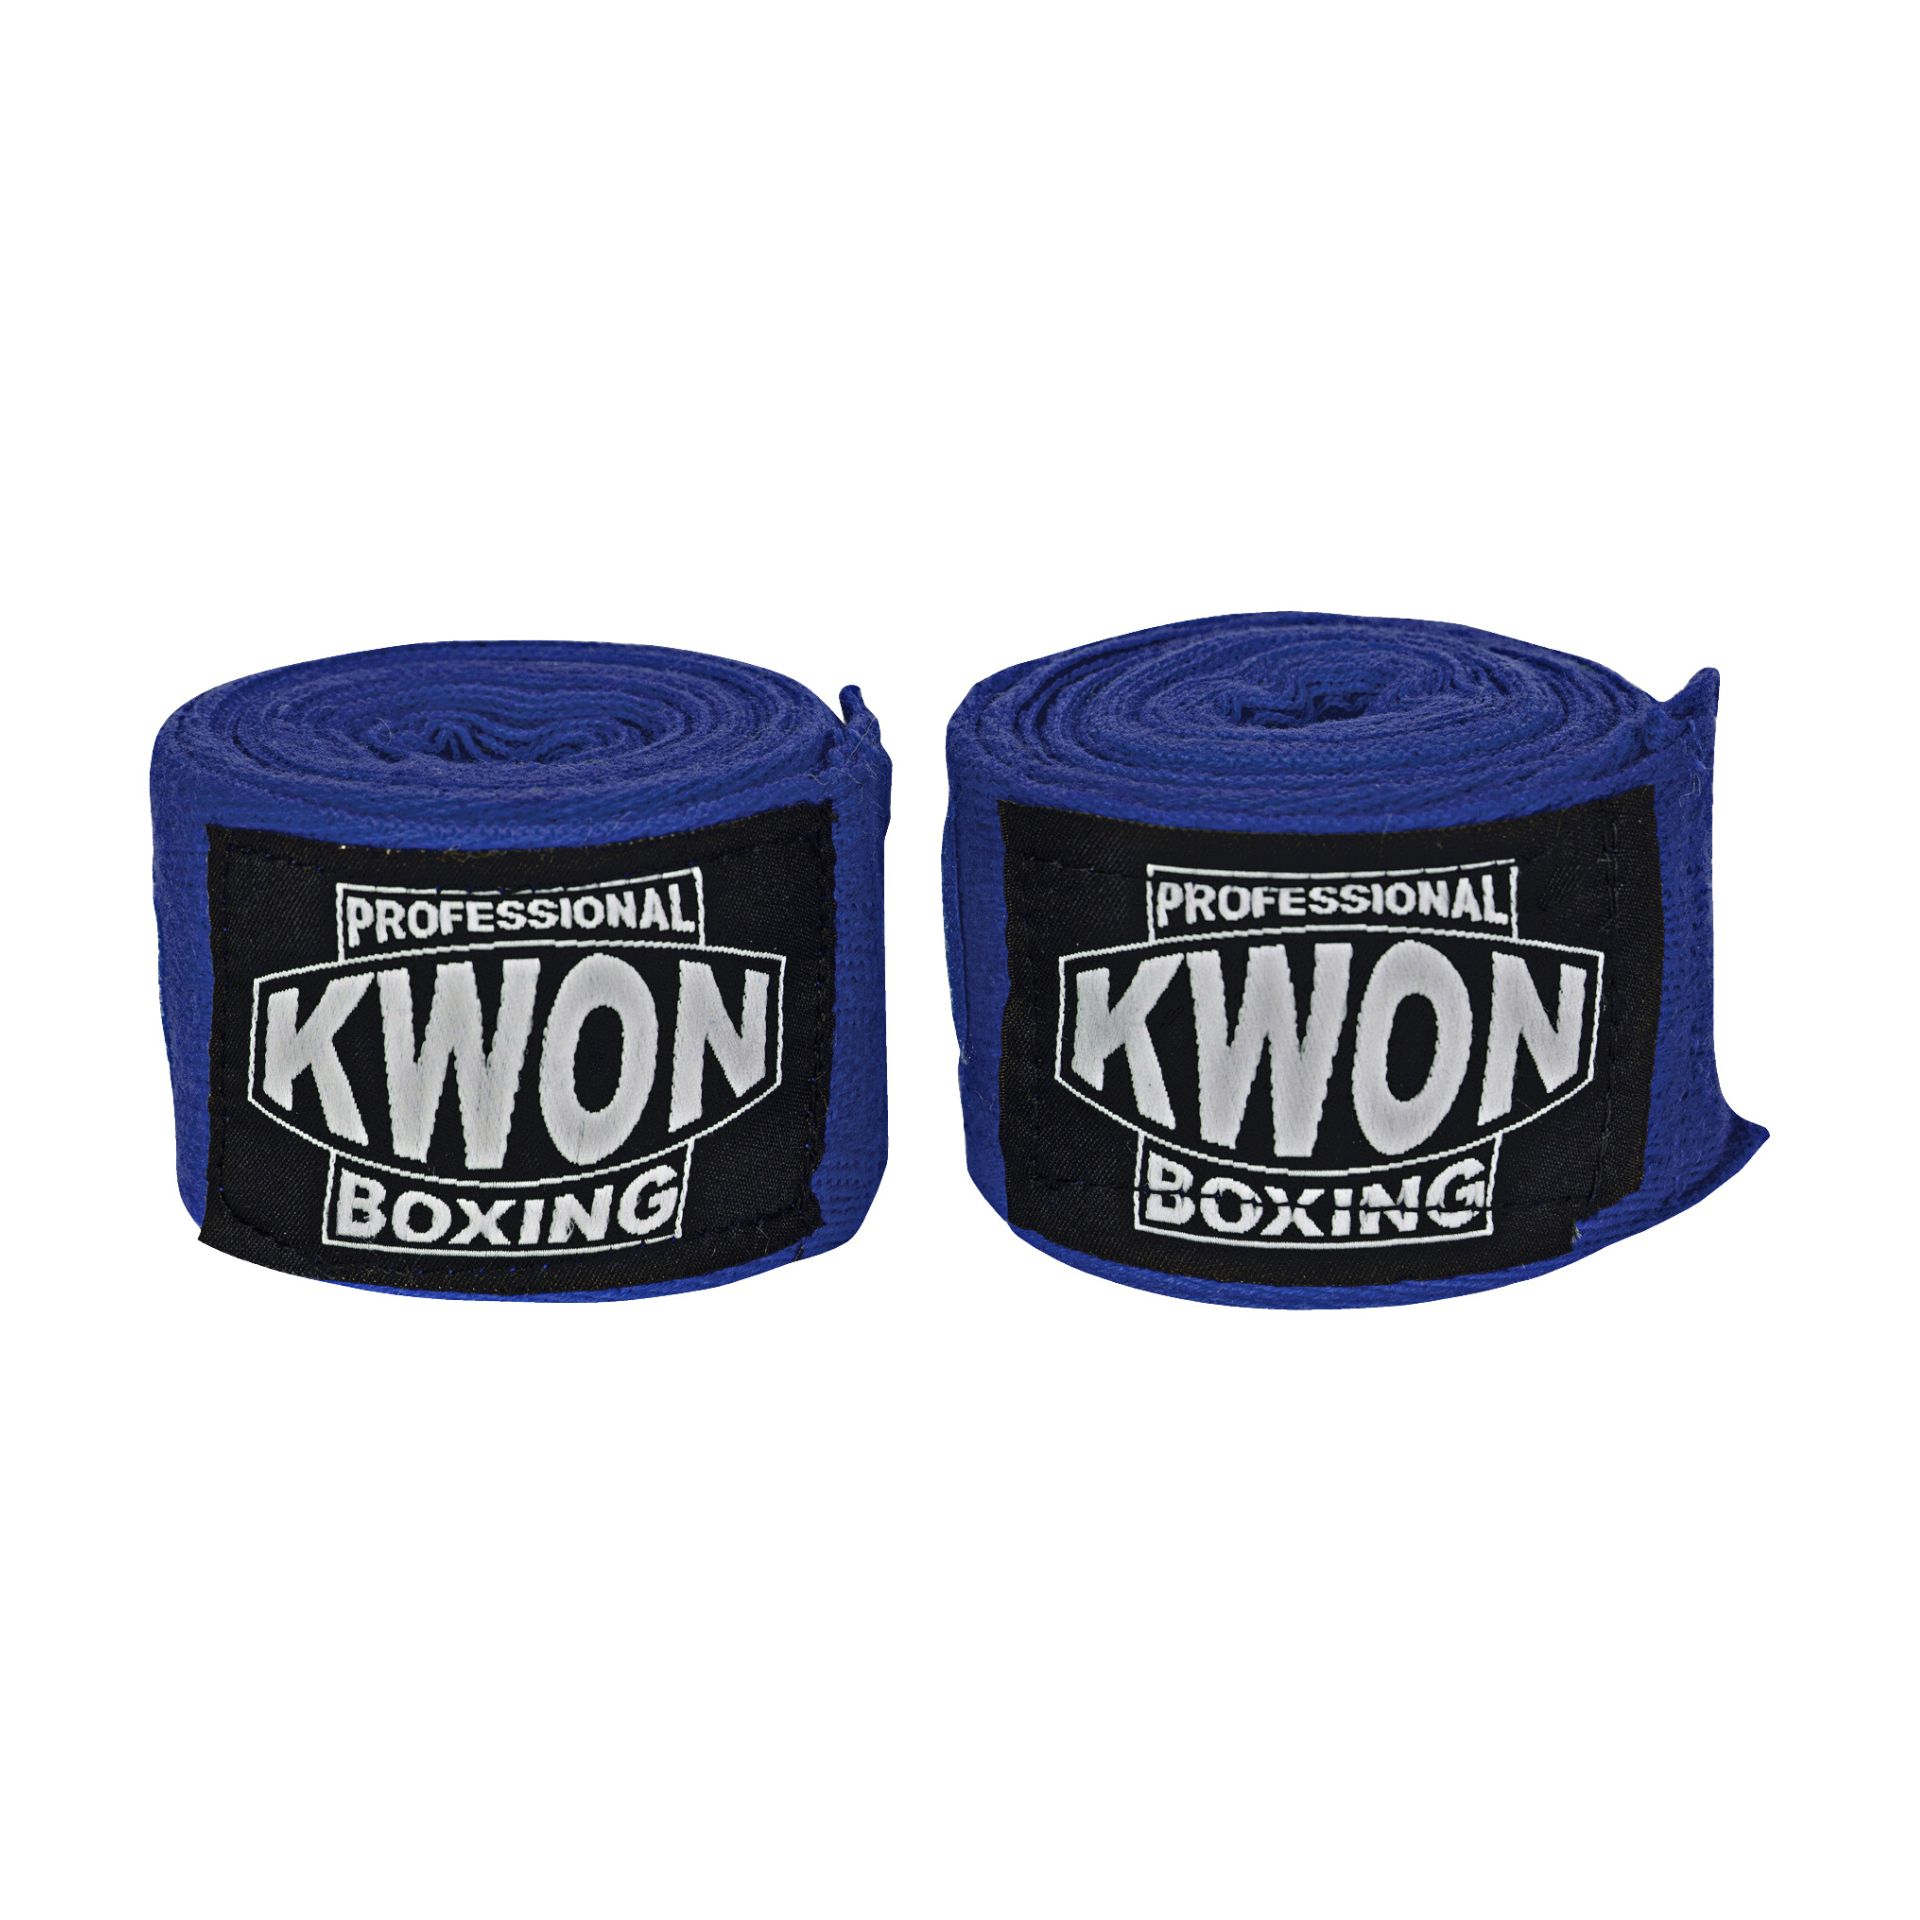 Boxbanadagen von KWON Professional Boxing